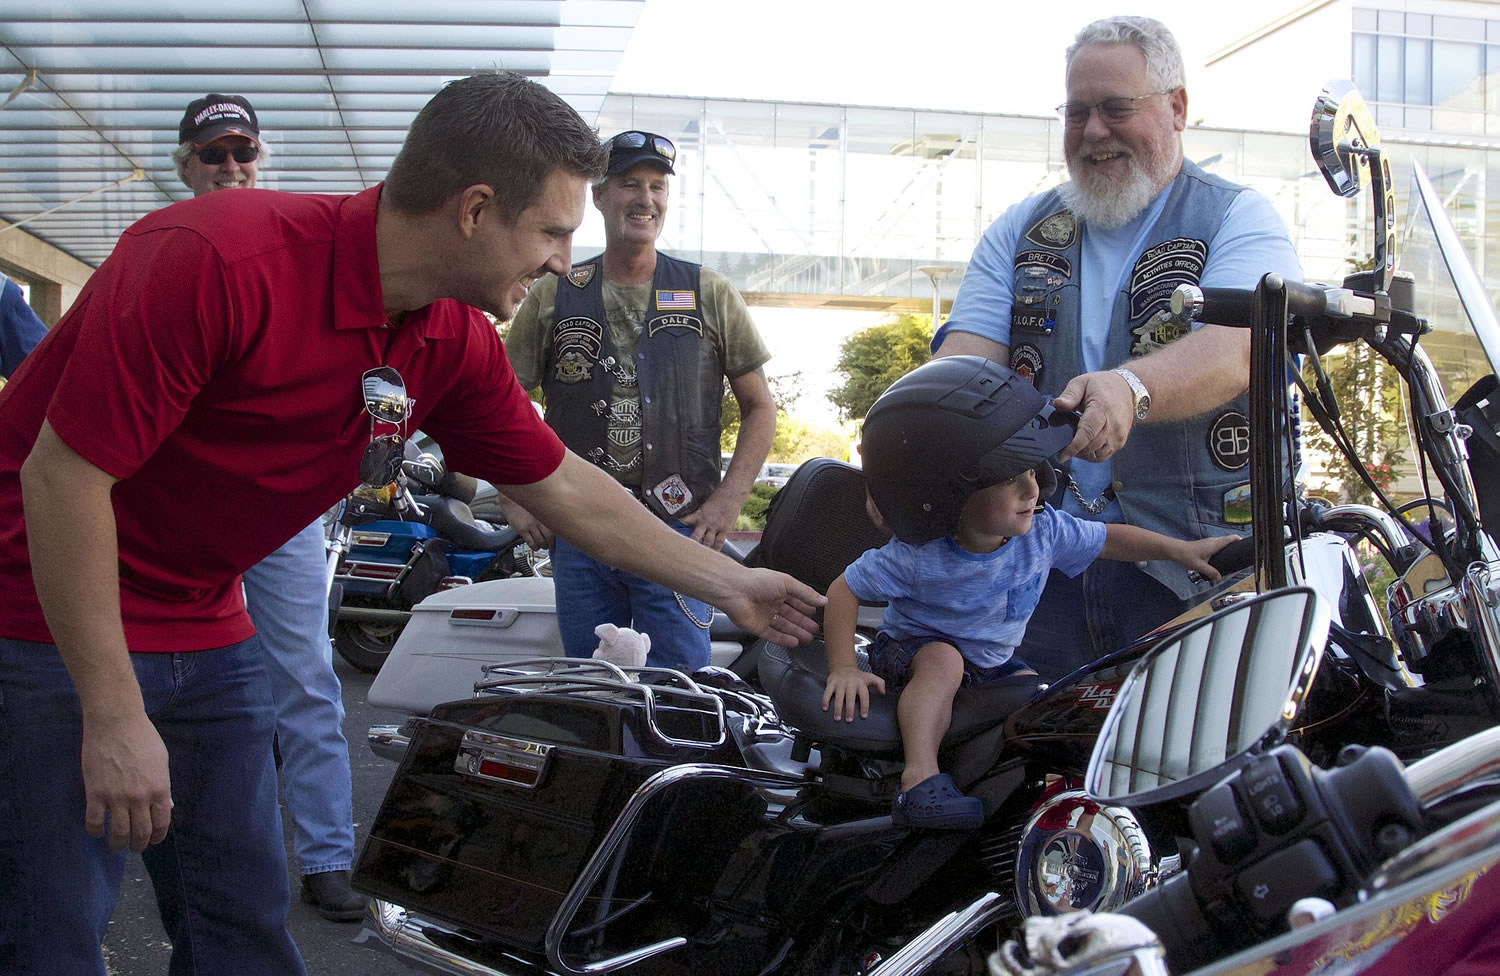 Westen Lodahl, 2, sits on a motorcycle as his dad, John Lodahl, left, and Brett Hockley help him.